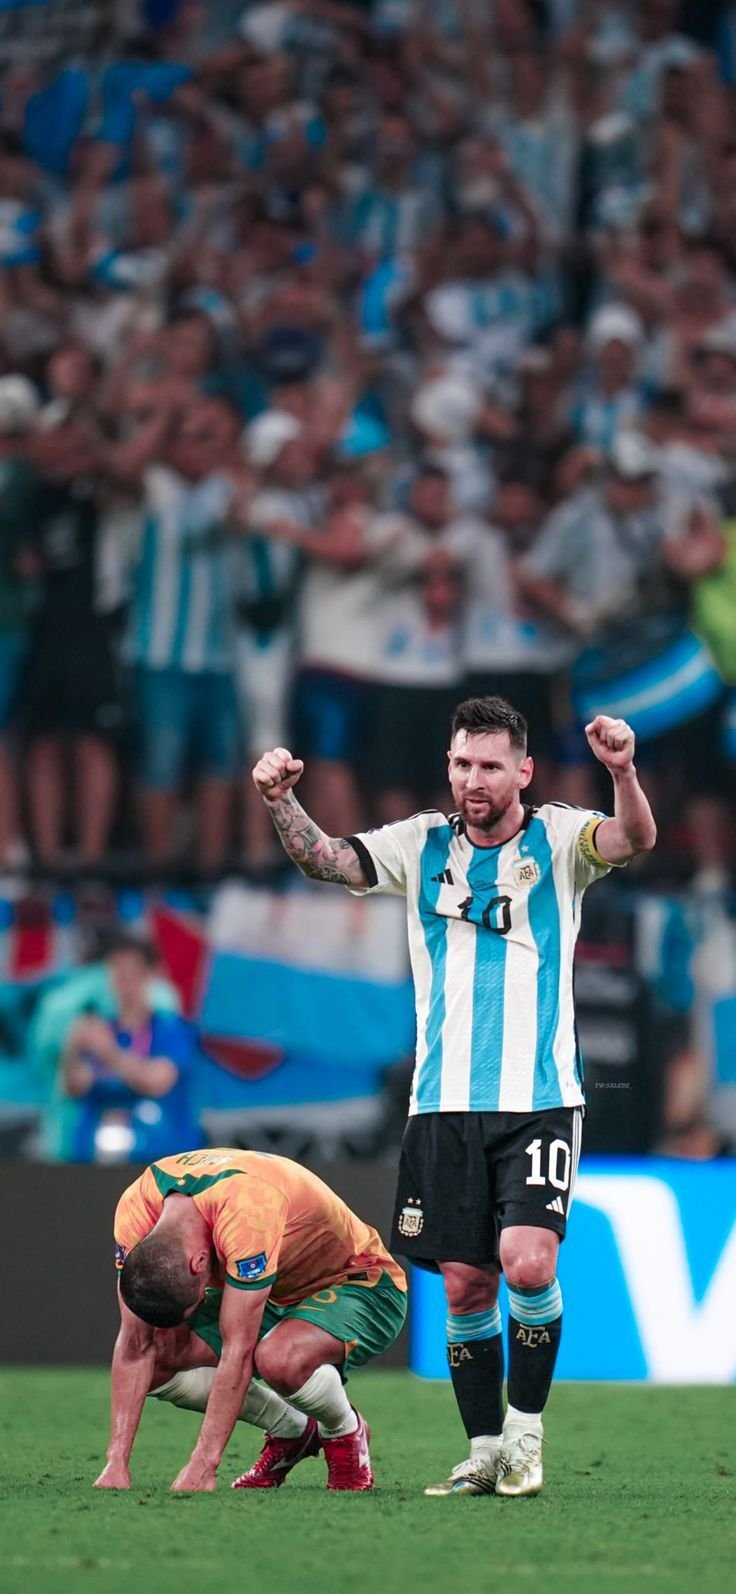 Lionel Messi Wallpaper Zedge